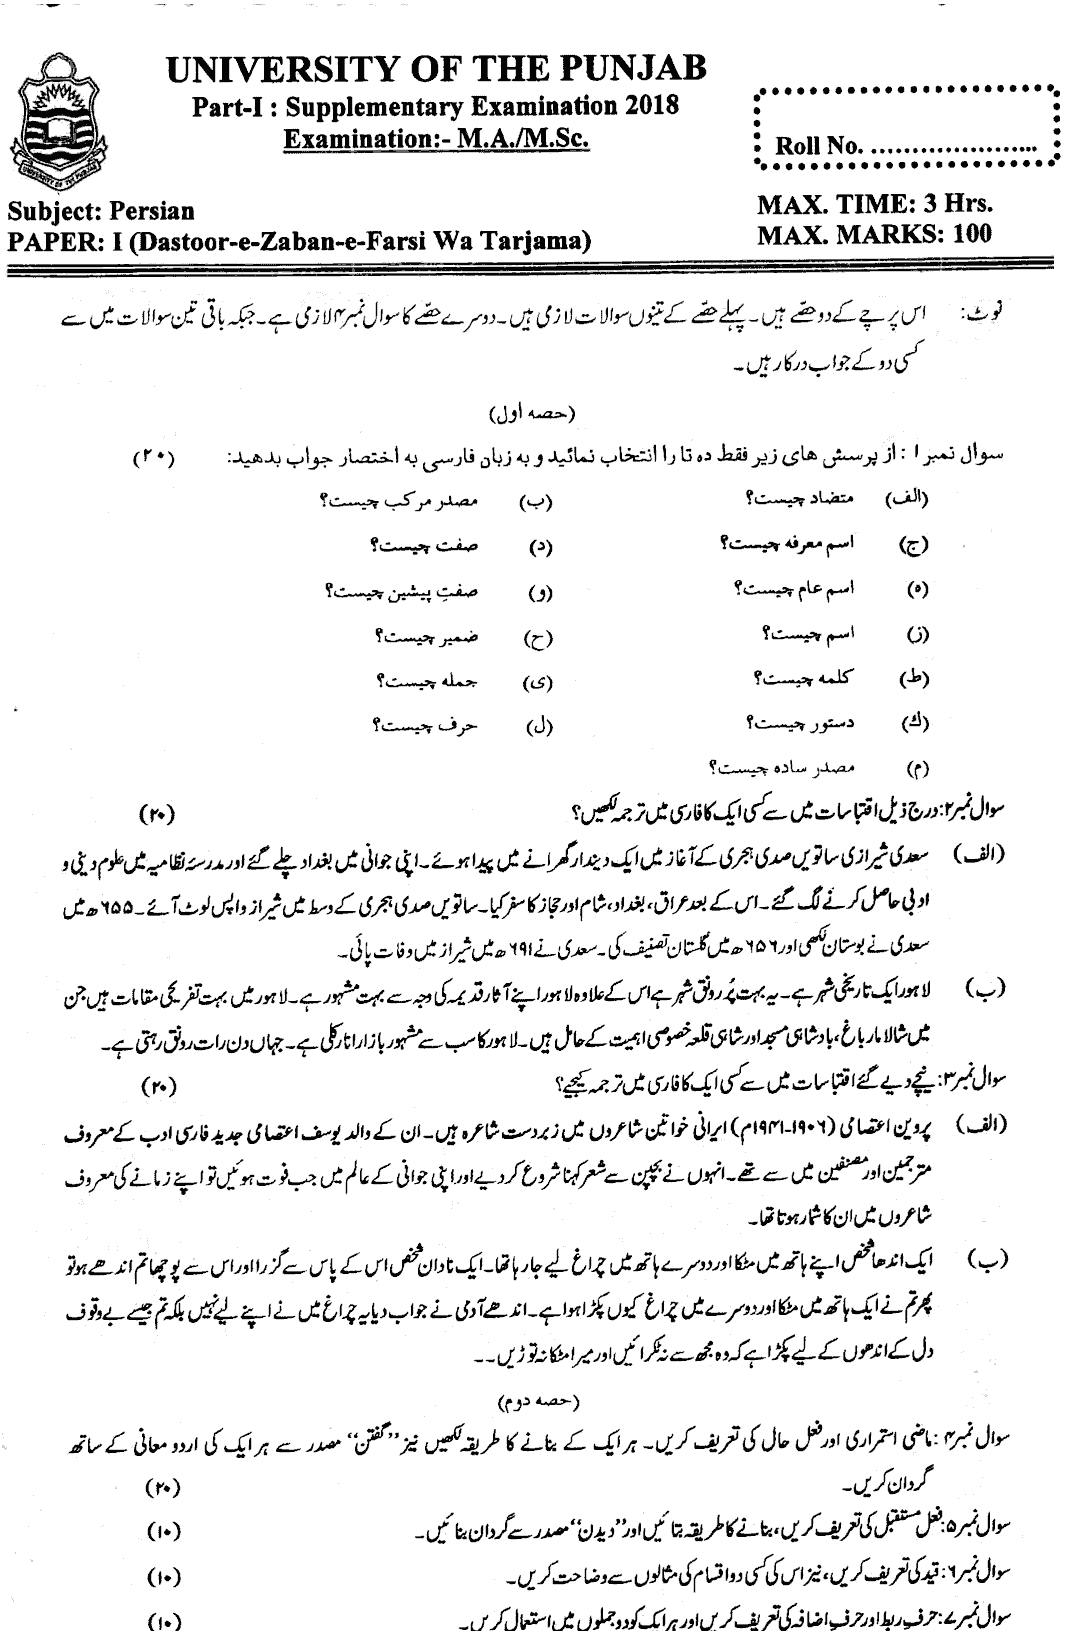 Ma Part 1 Persian Dasioor E Zaban E Farsi Wa Tarjama Past Paper 2018 Punjab University